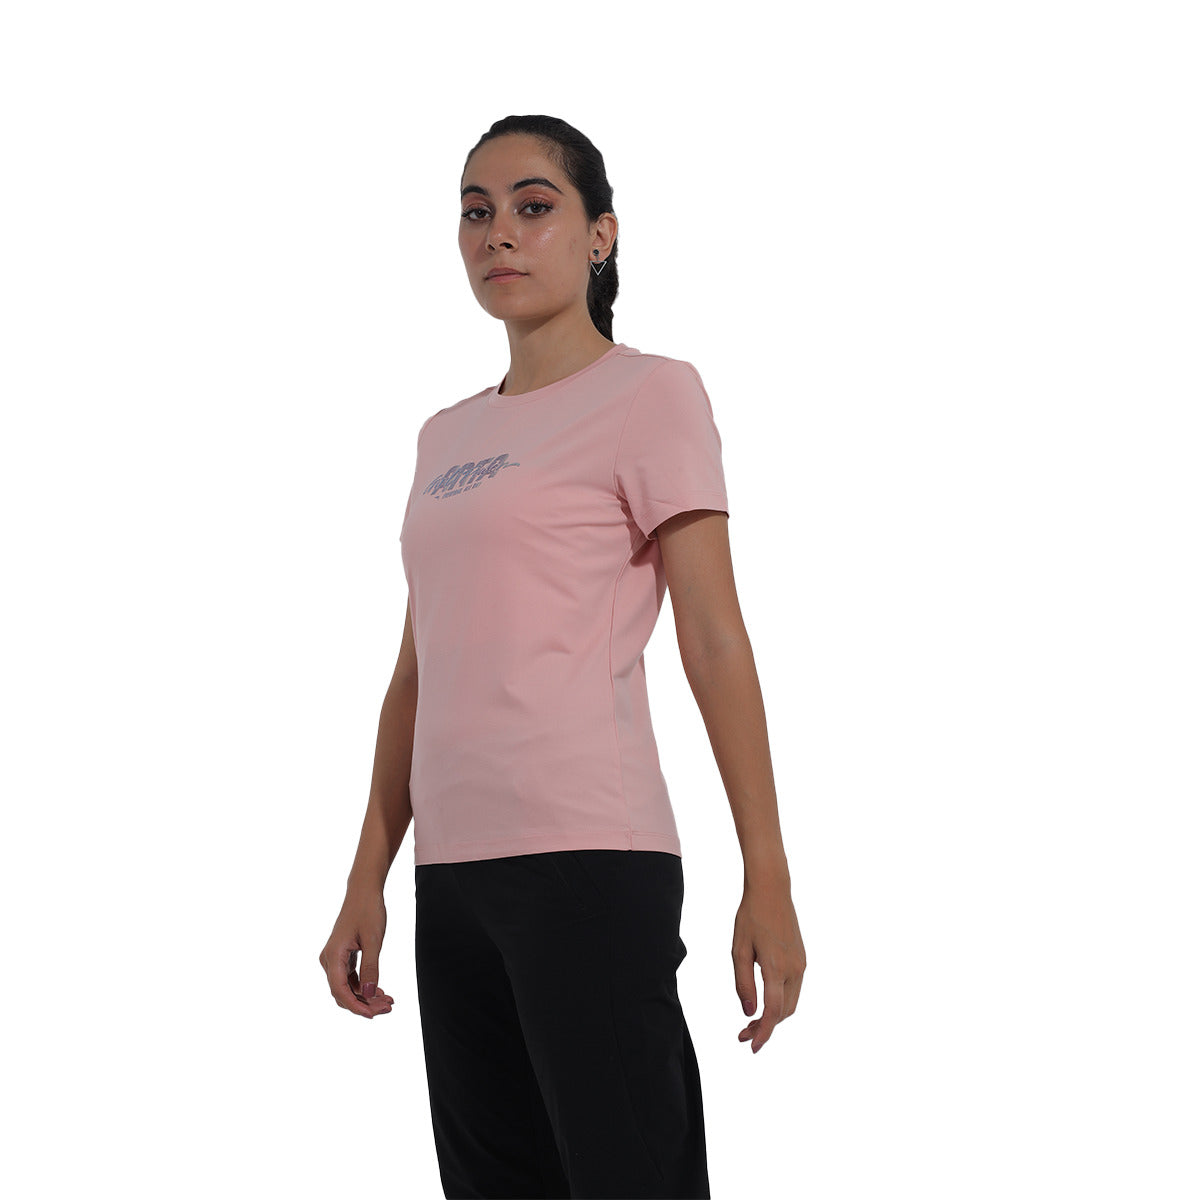 Anta Ss Tee Cross Training T-Shirt For Women, Pink White